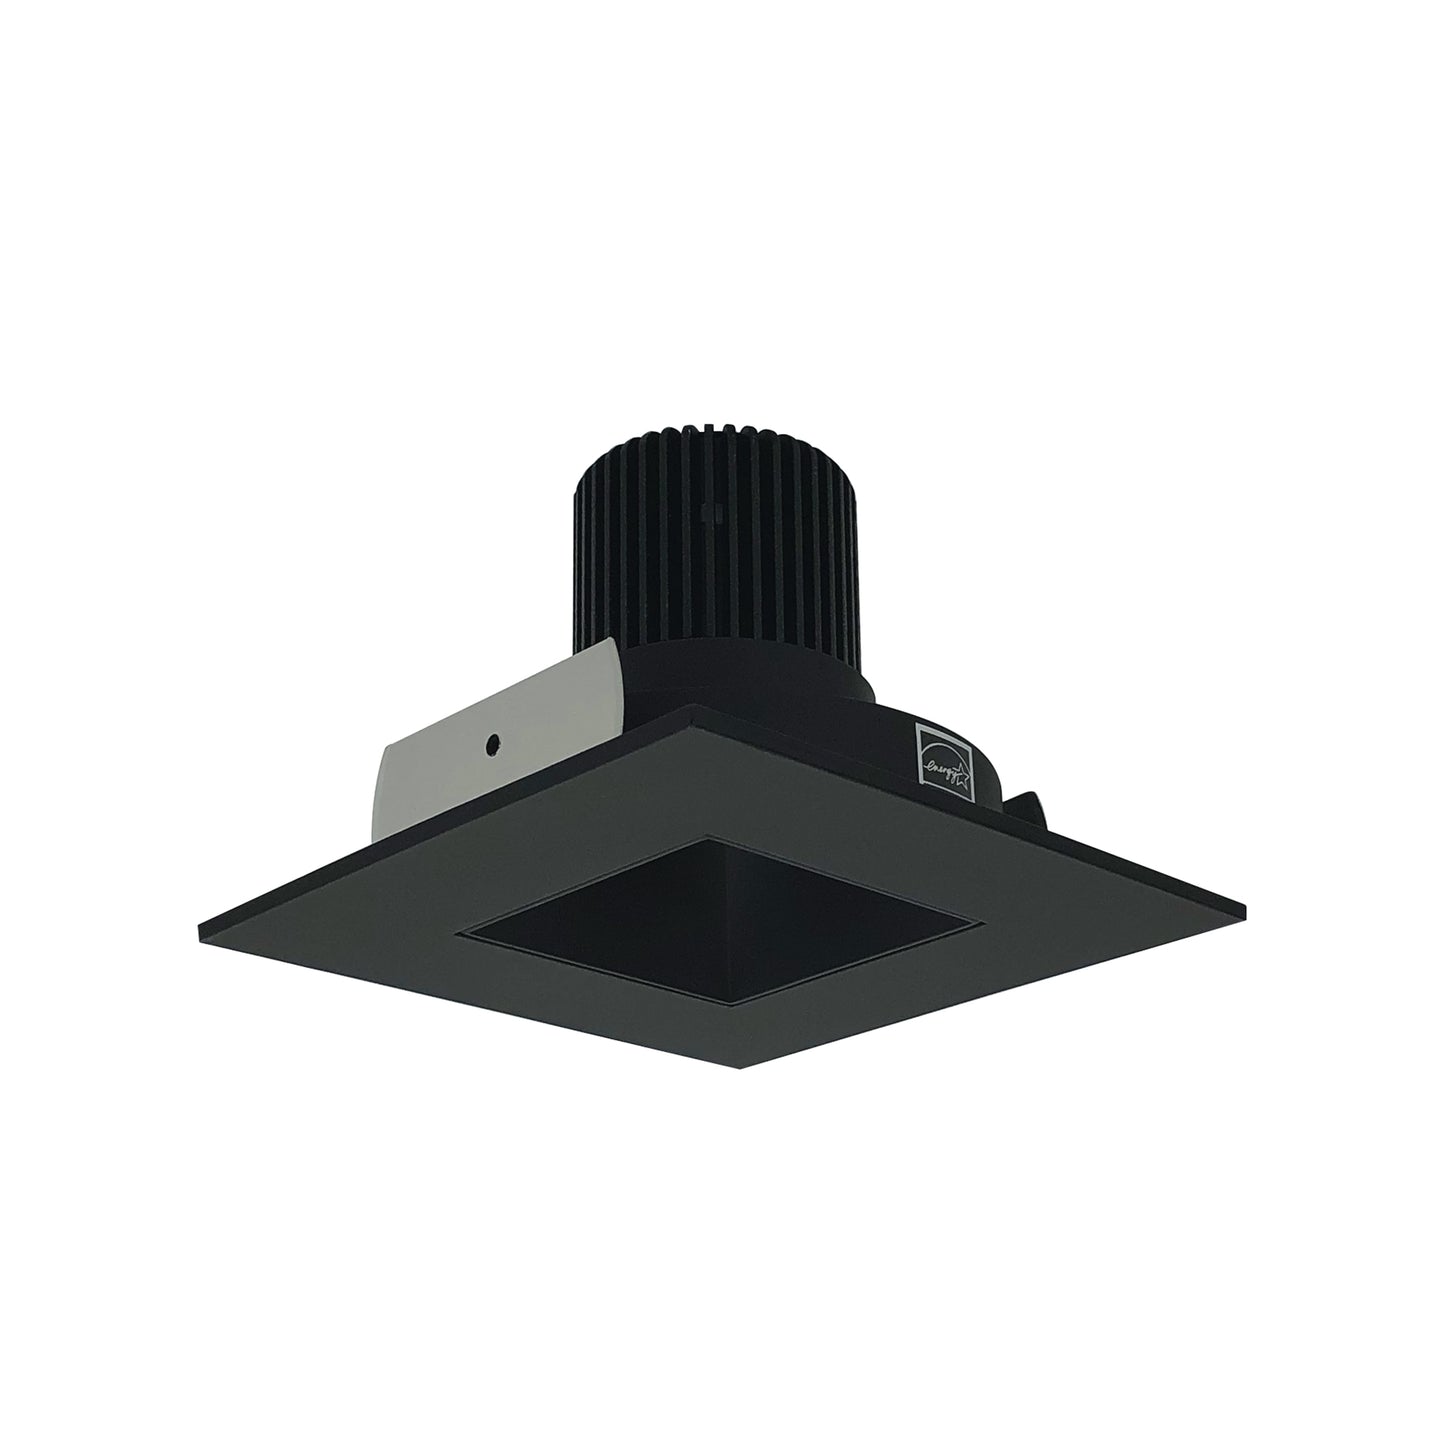 Nora Lighting 4" Iolite LED Square Reflector with Square Aperture, 800lm / 14W, Comfort Dim, Black Reflector / Black Flange NIO-4SNDSQCDXBB